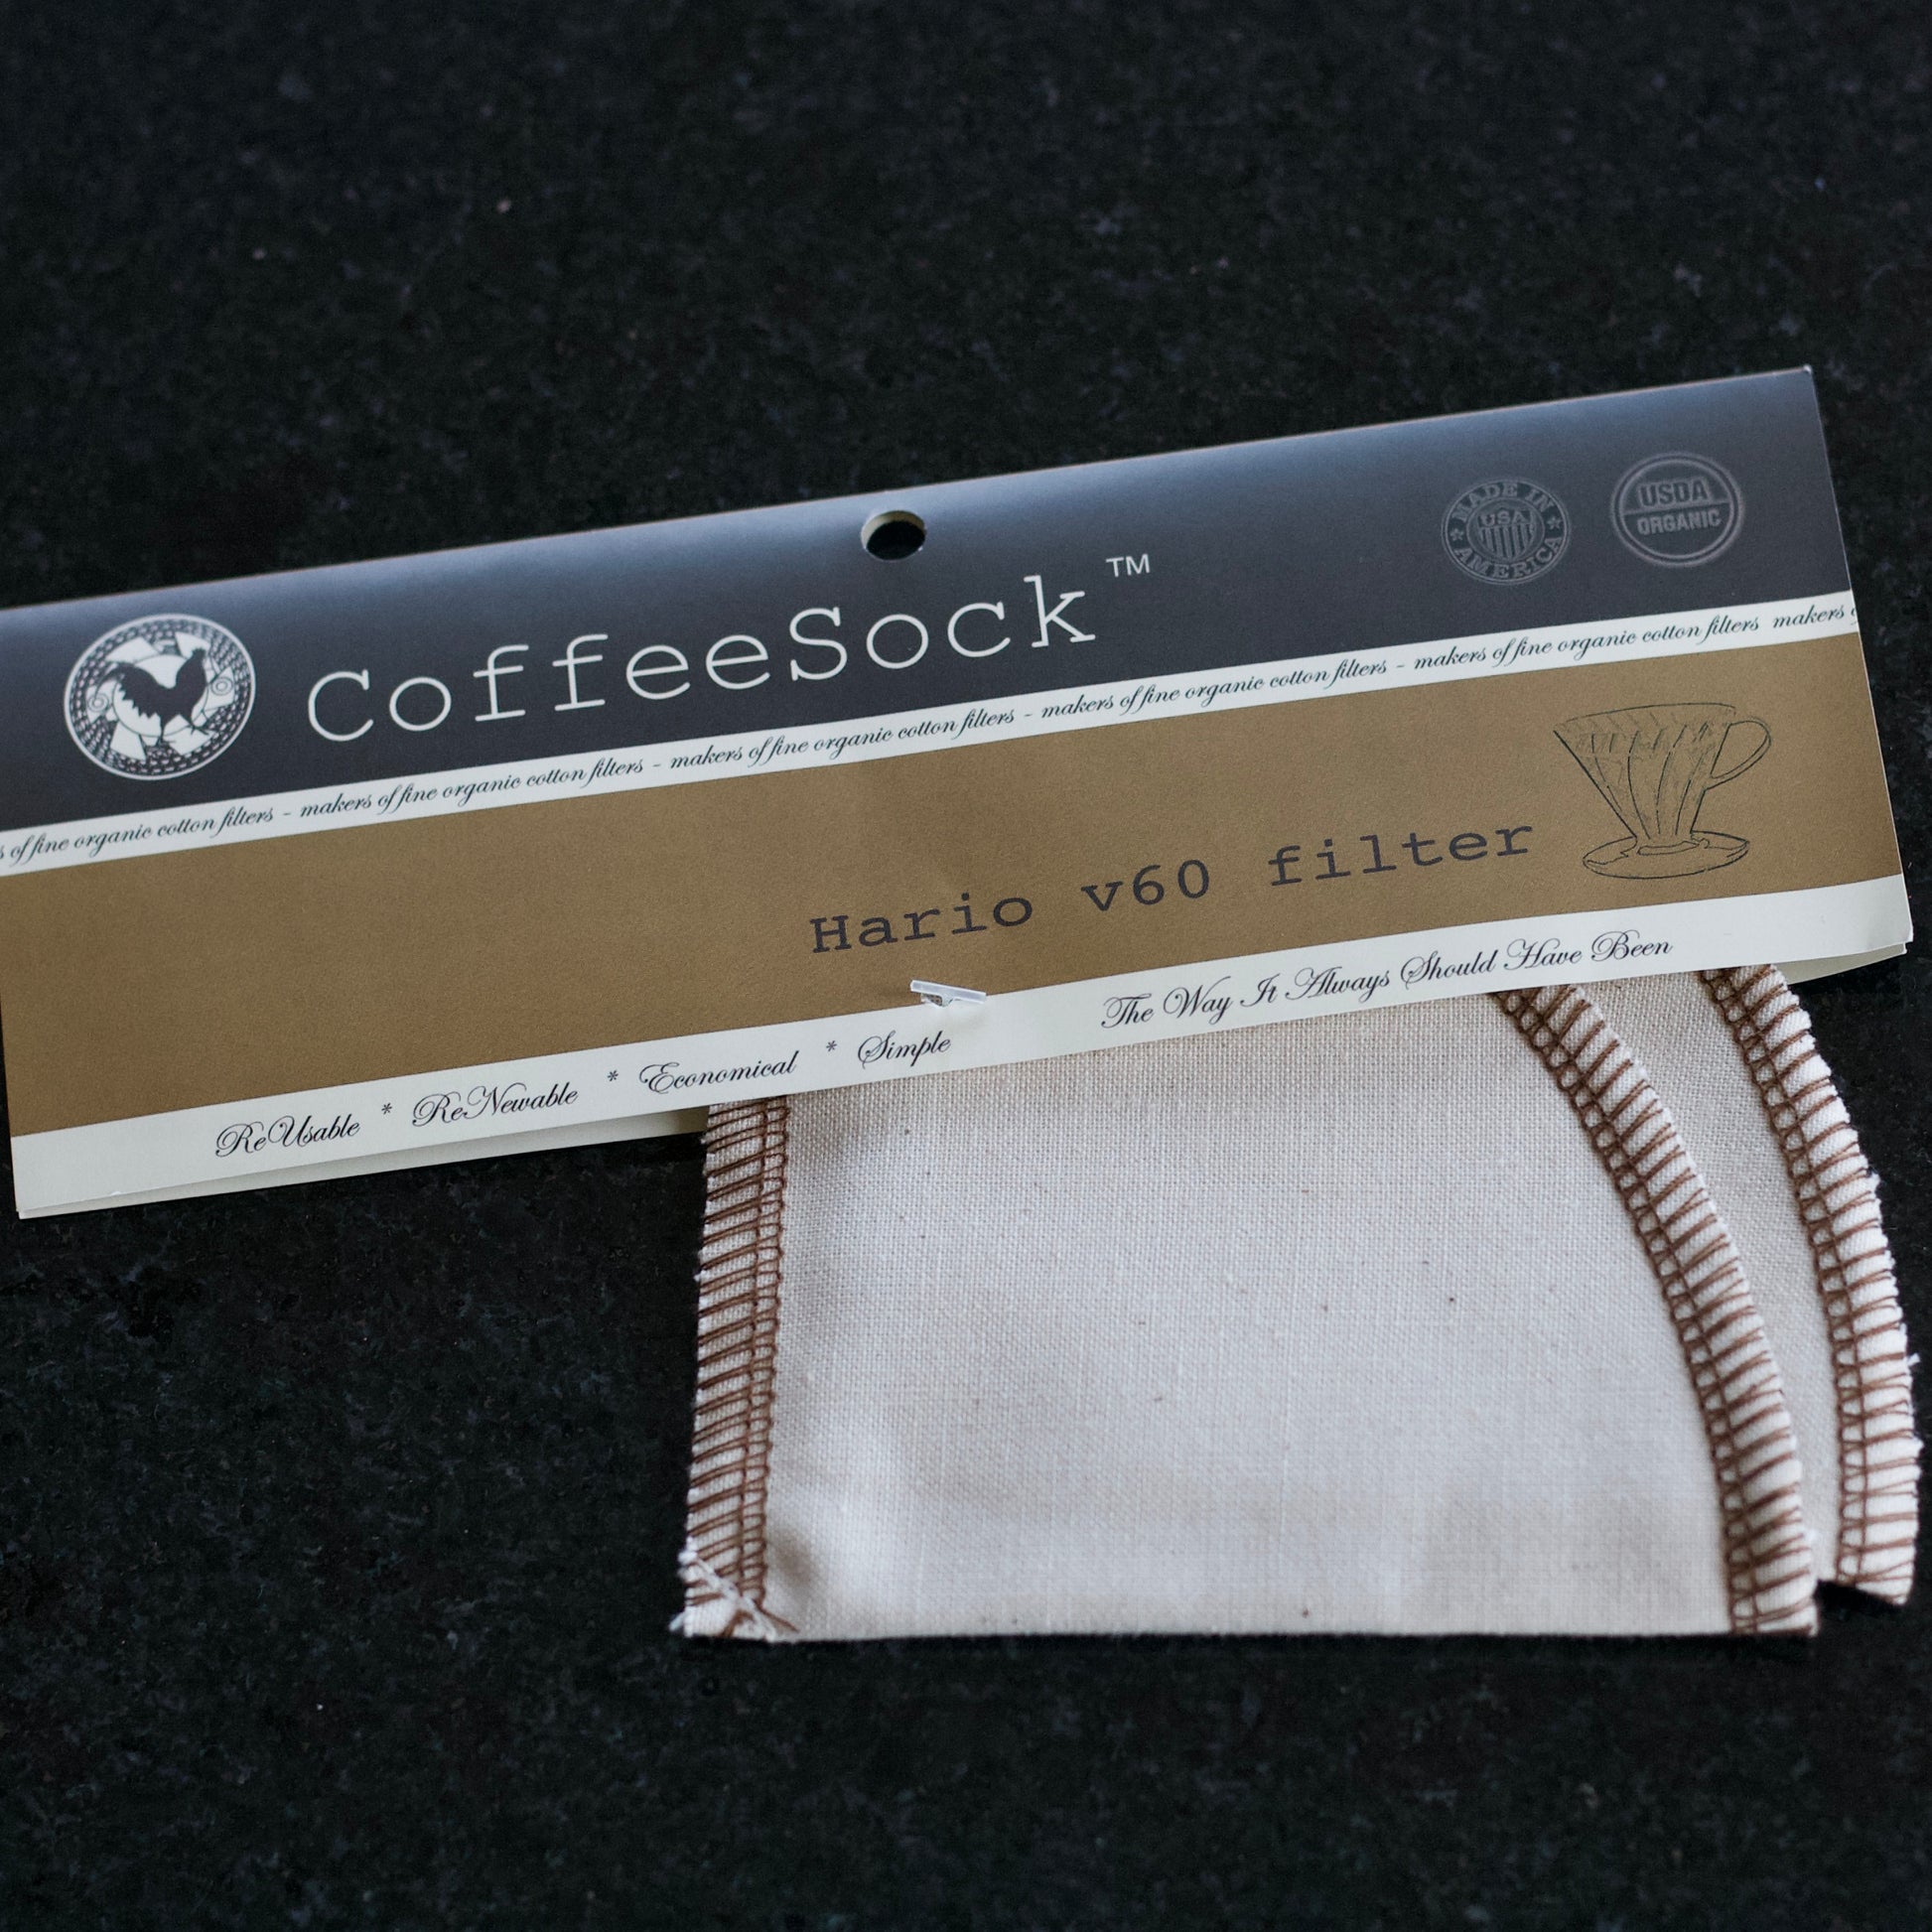 Coffee Sock for Hario v60